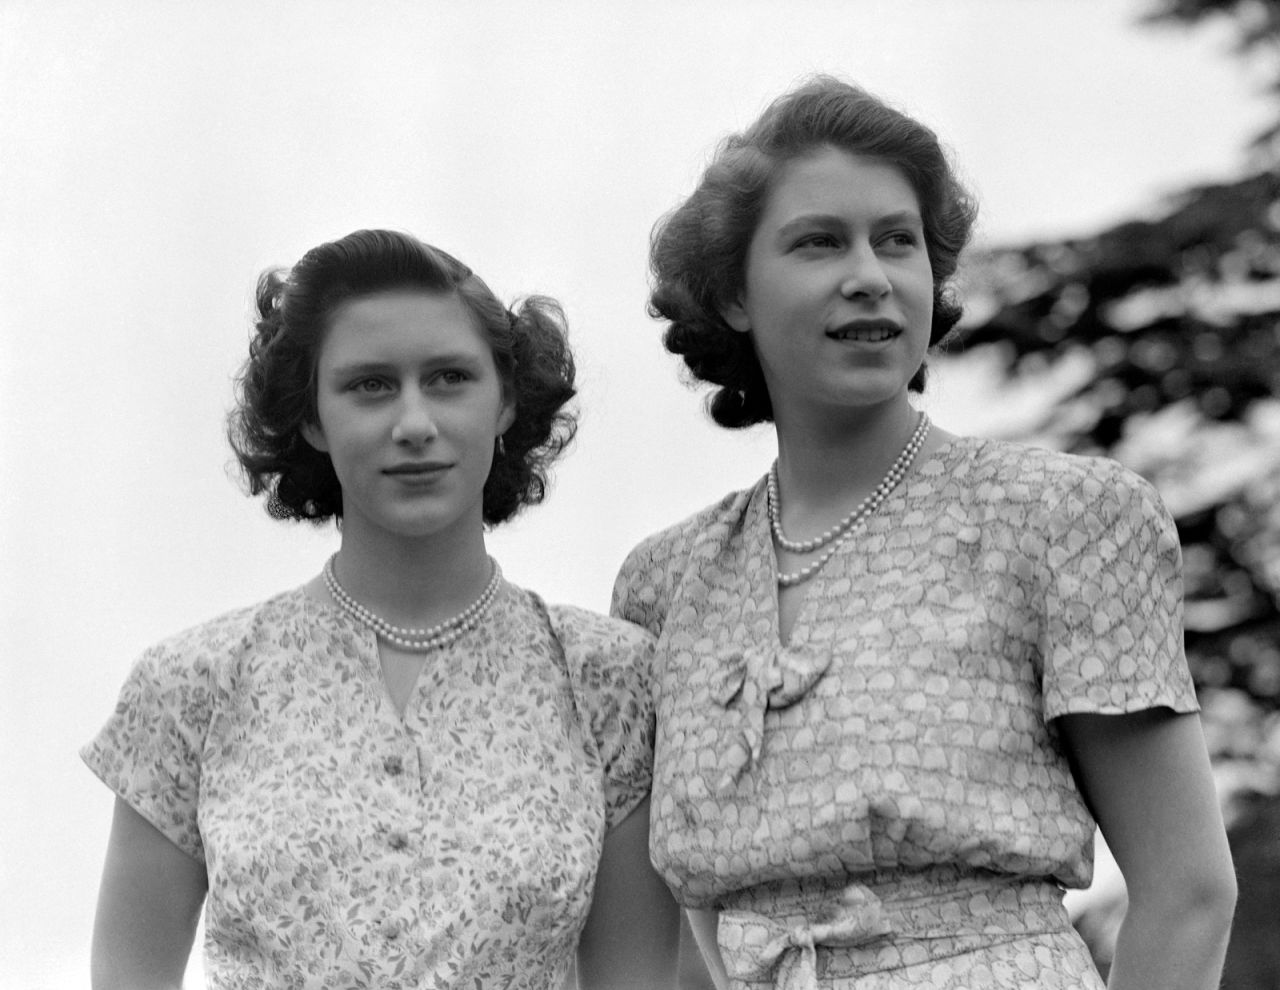 Elizabeth, right, and Princess Margaret wear summer dresses circa 1942. Margaret is Elizabeth's only sibling.